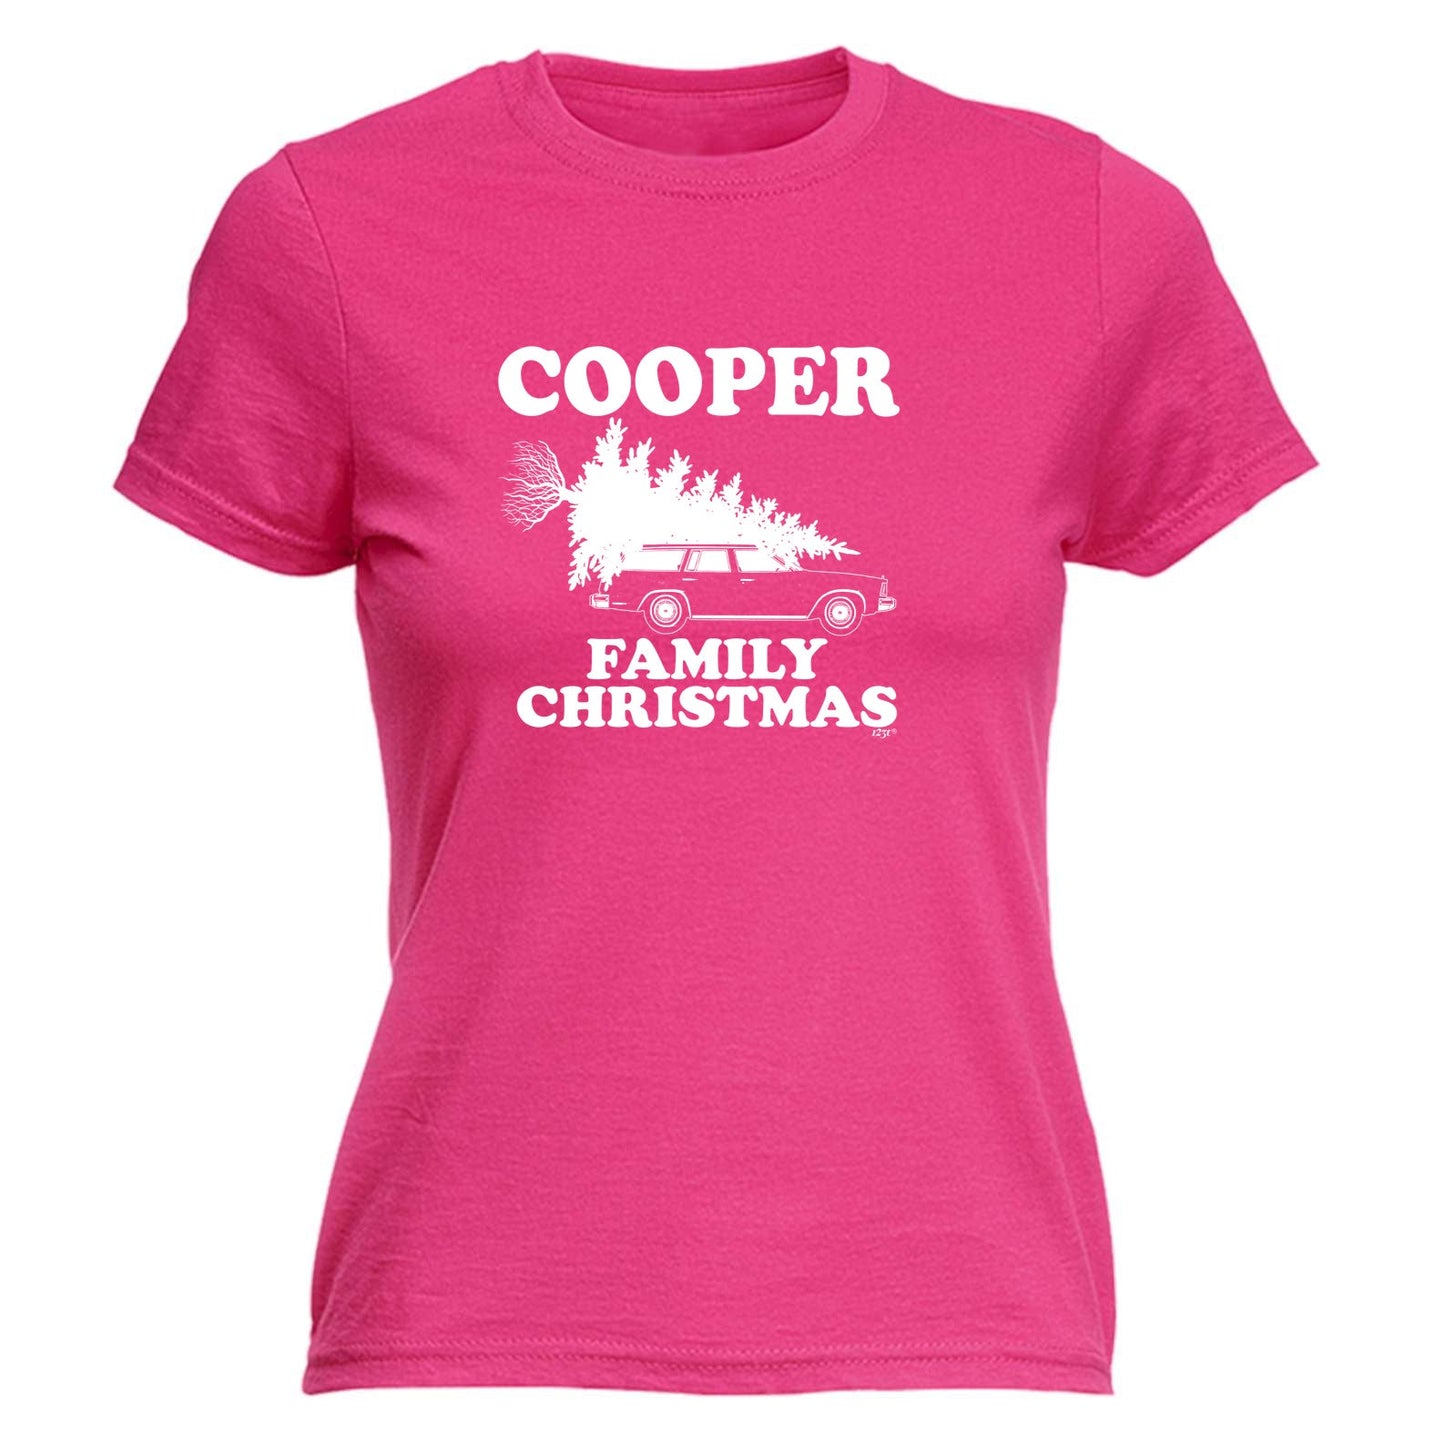 Family Christmas Cooper - Xmas Novelty Womens T-Shirt Tshirt